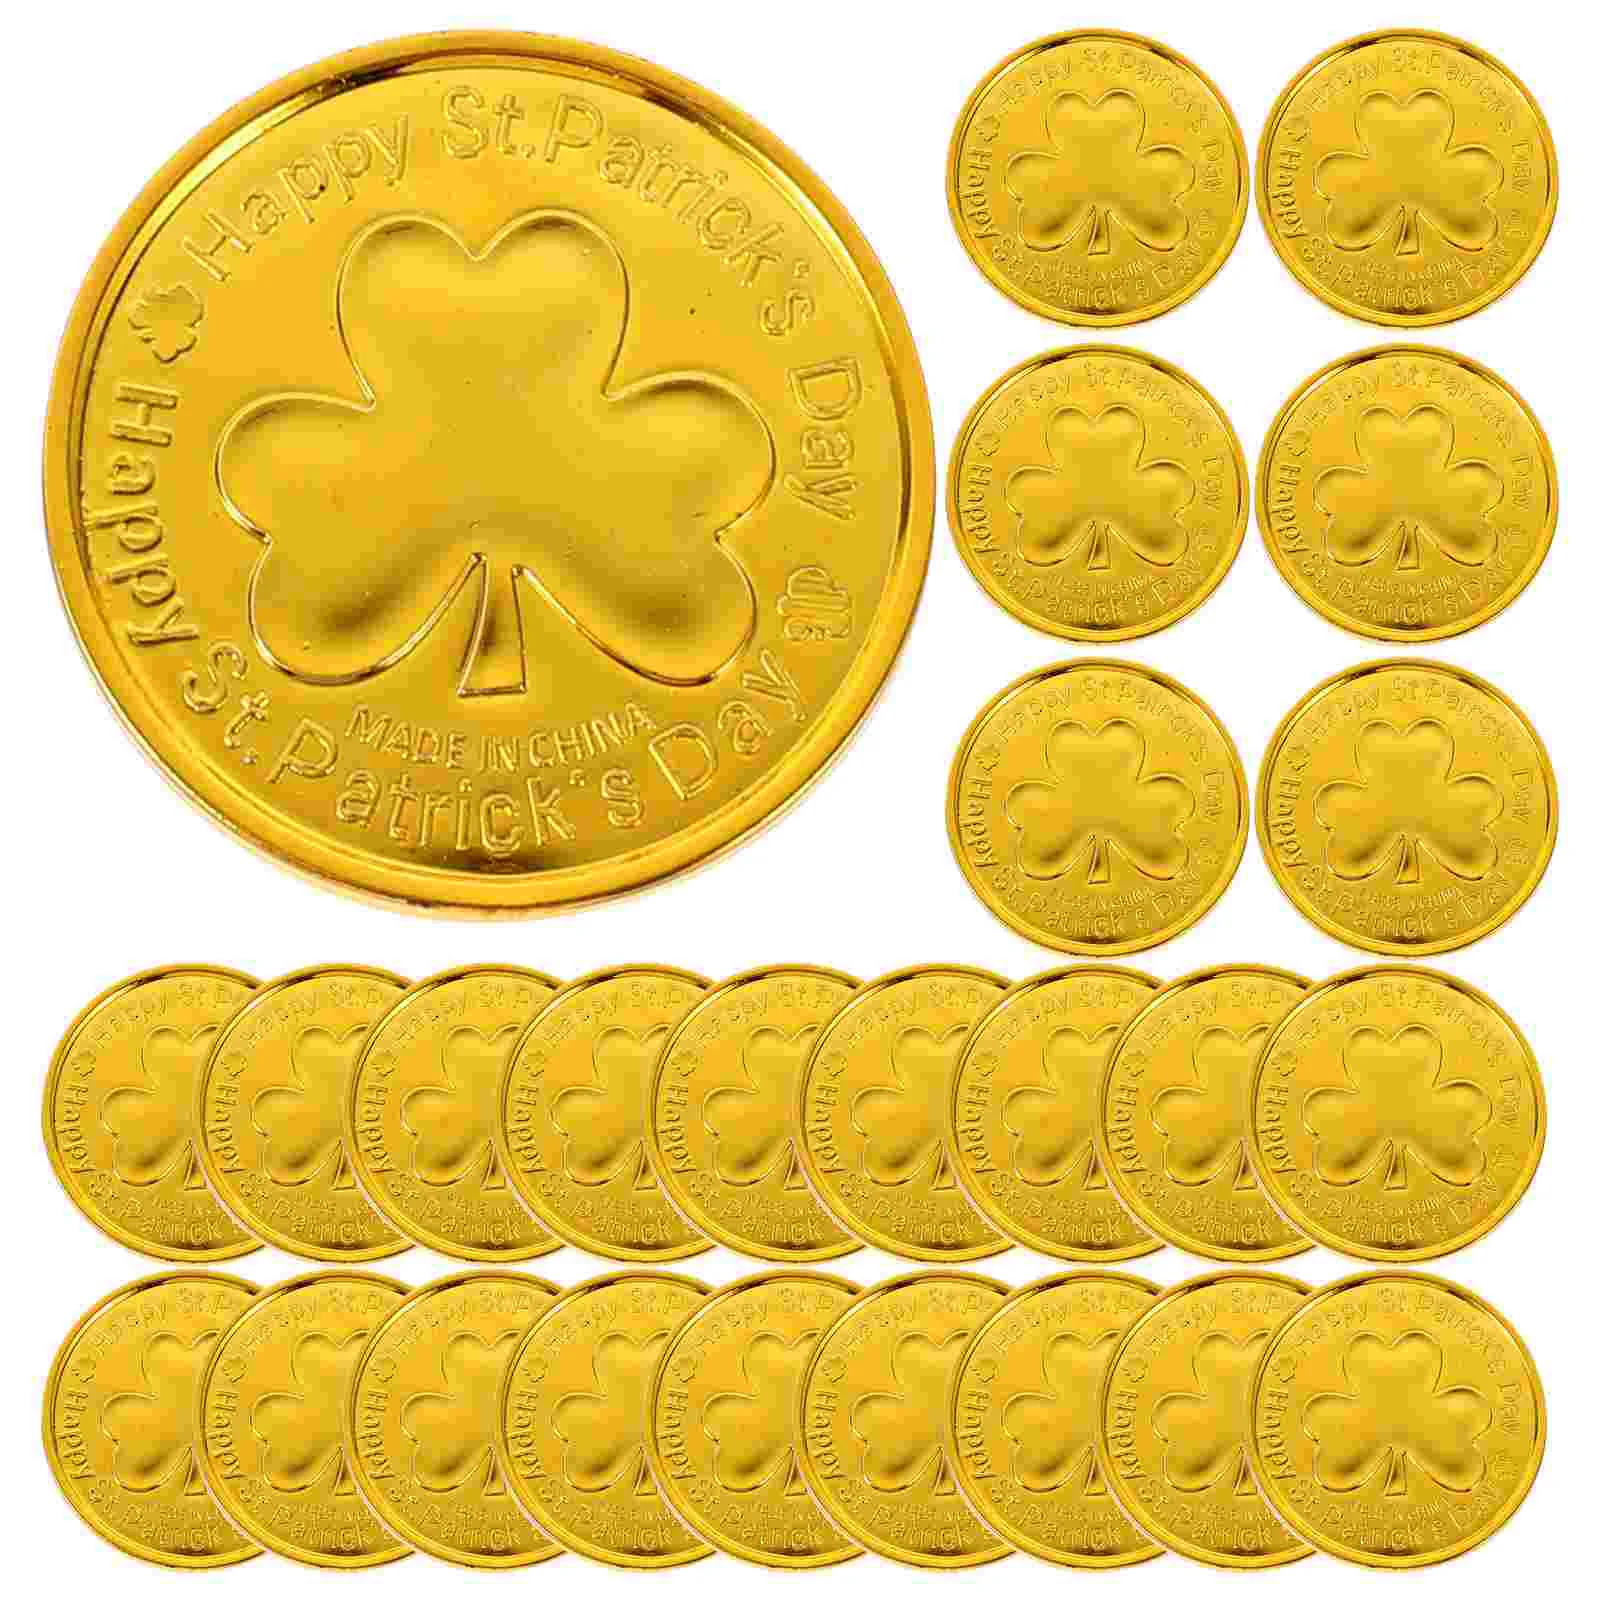 

100 Pcs St Patrick's Day Plastic Coin Decoration Luck 3-leaf Make Party Favor Shamrock Ornament Saint Coins Toy